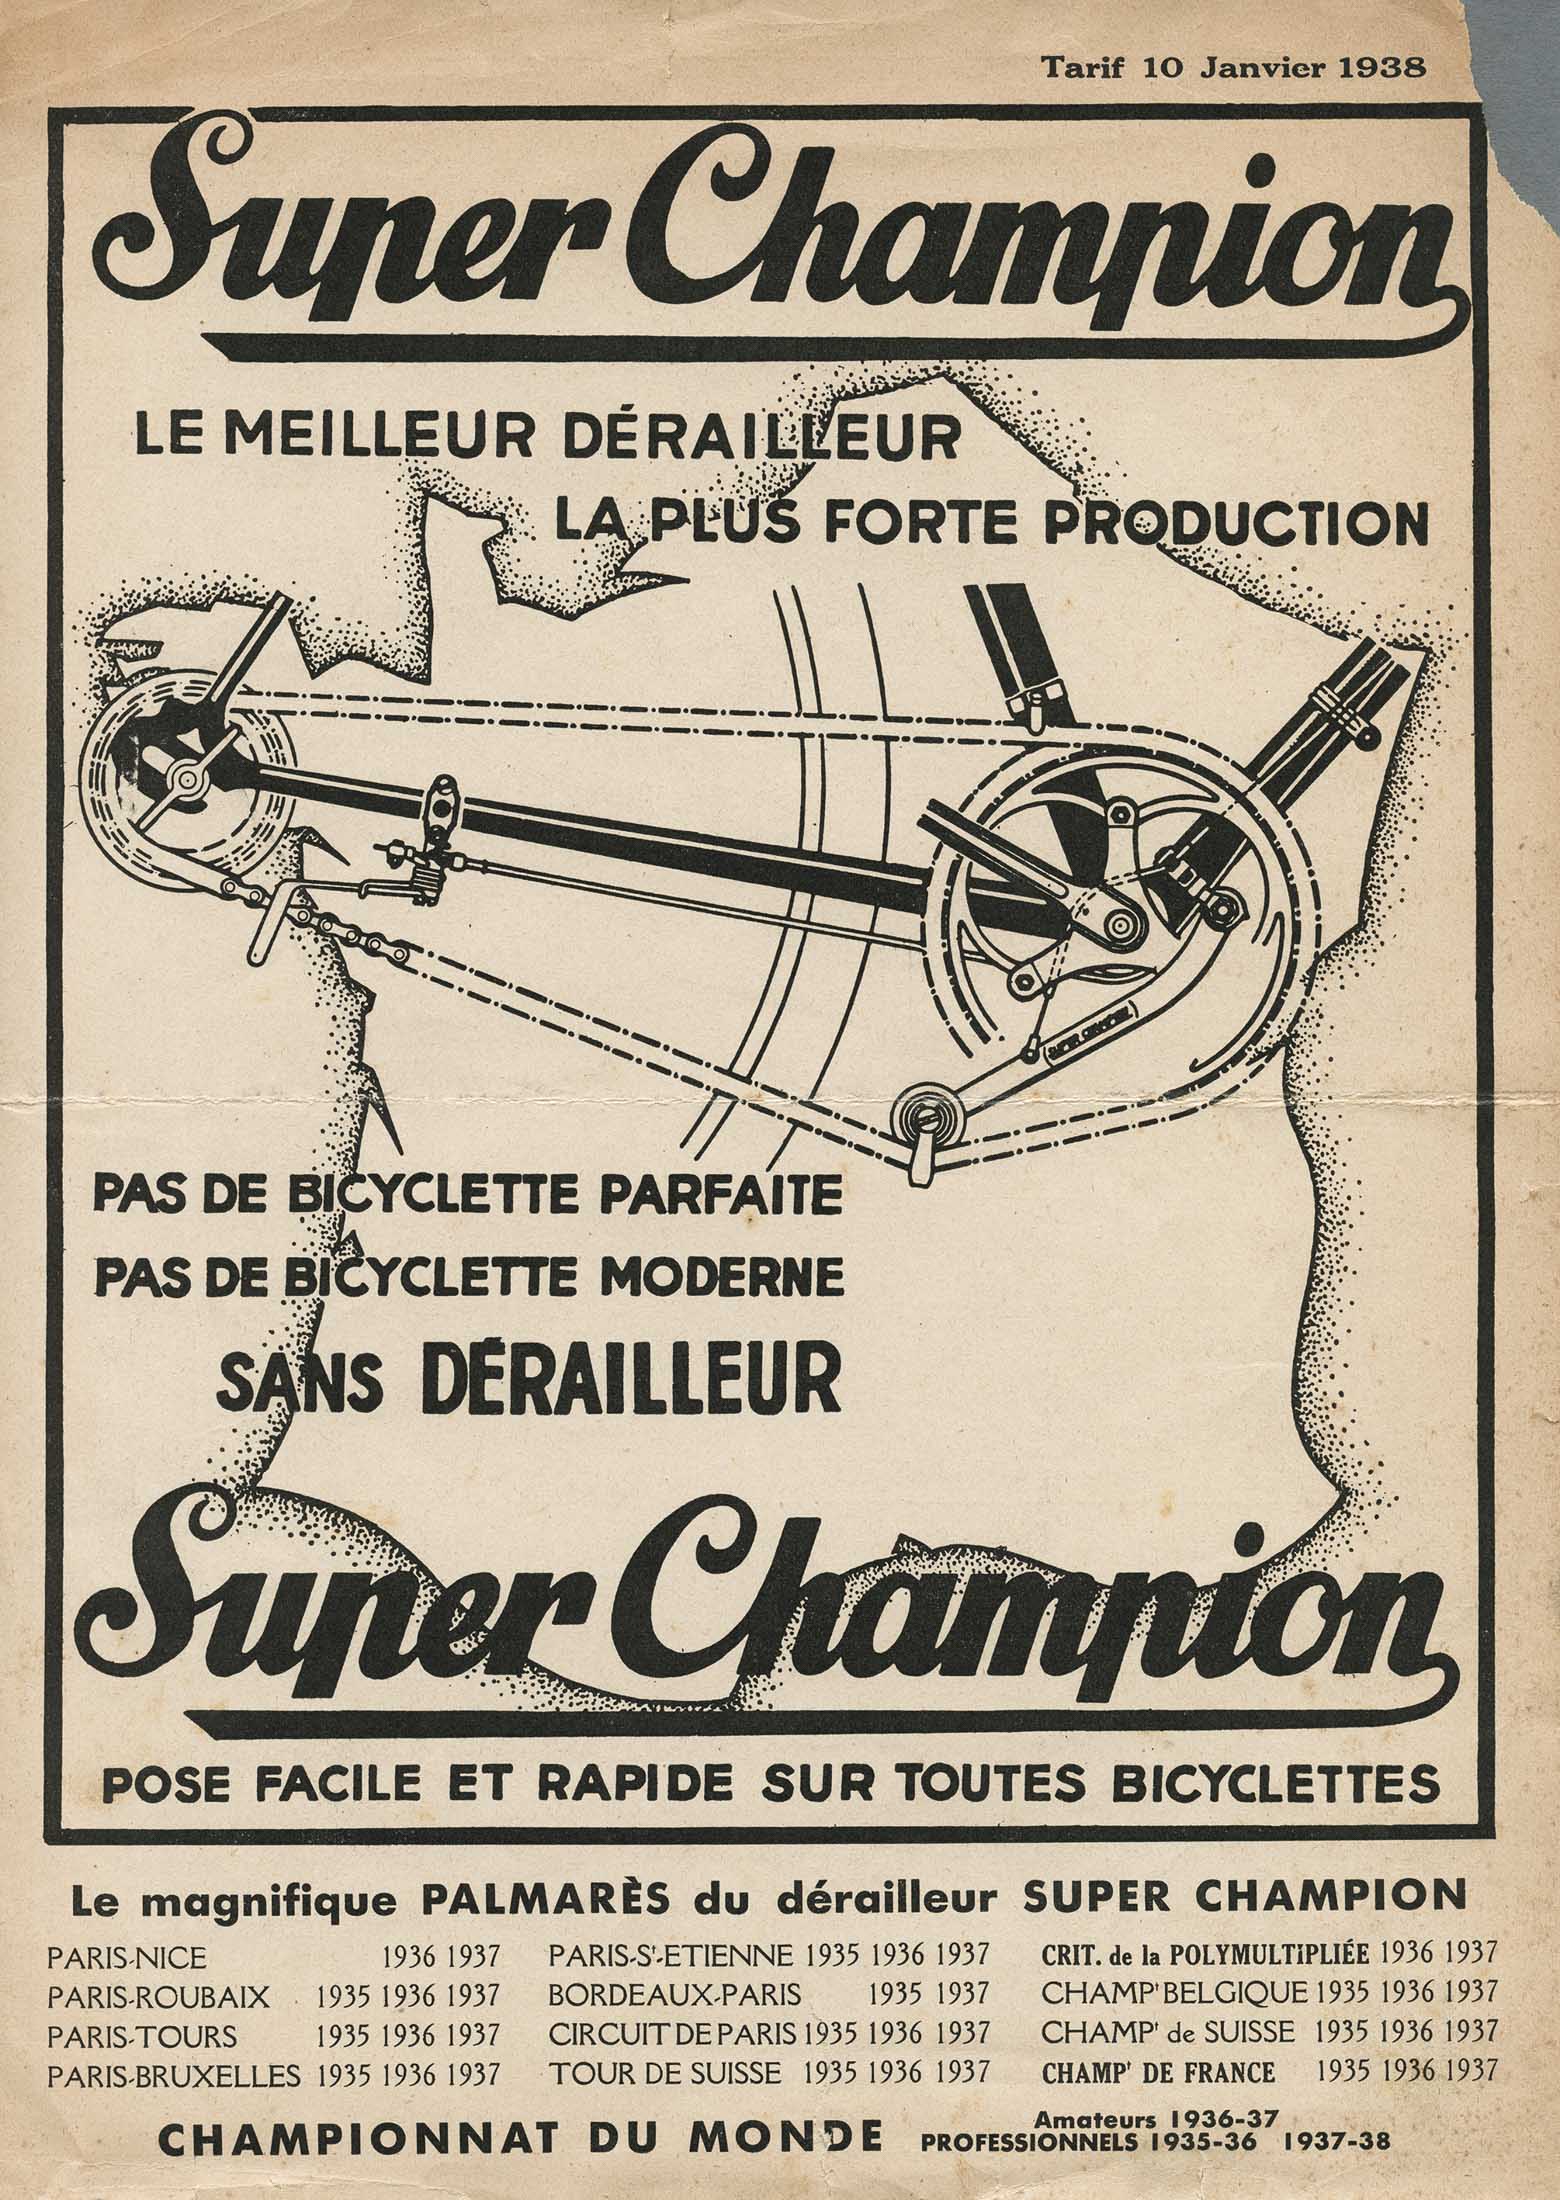 Super Champion - Tarif 10 Janvier 1938 scan 1 main image